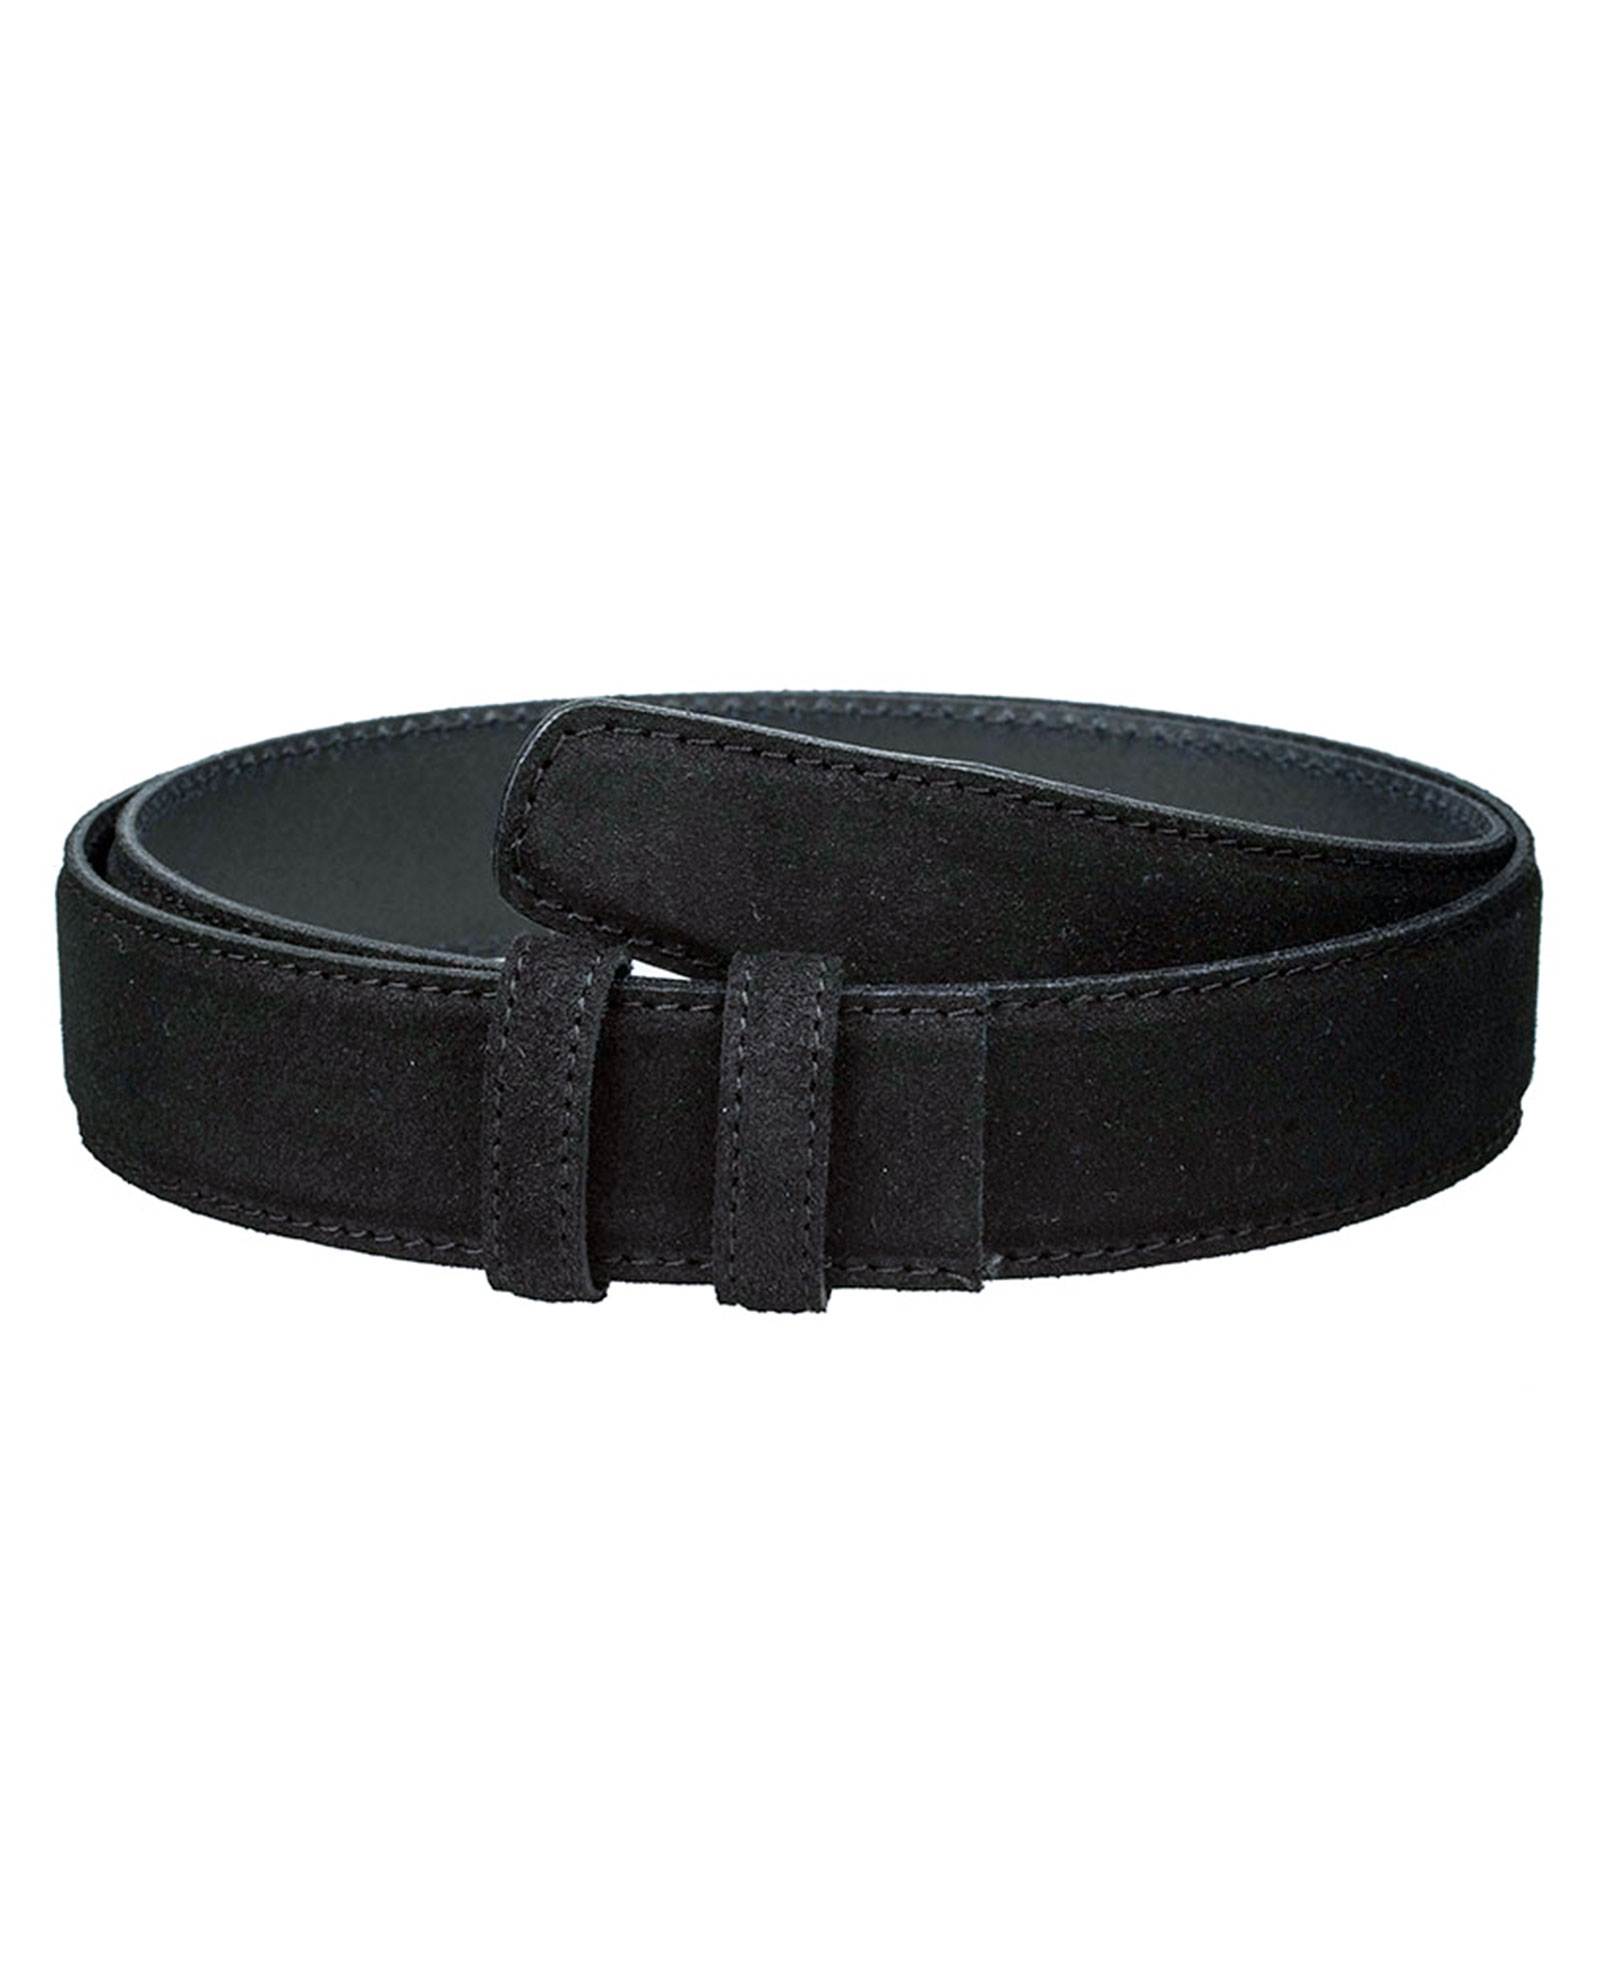 Buy Men's Black Leather Belt | 100% Italian Suede | Free Shipping